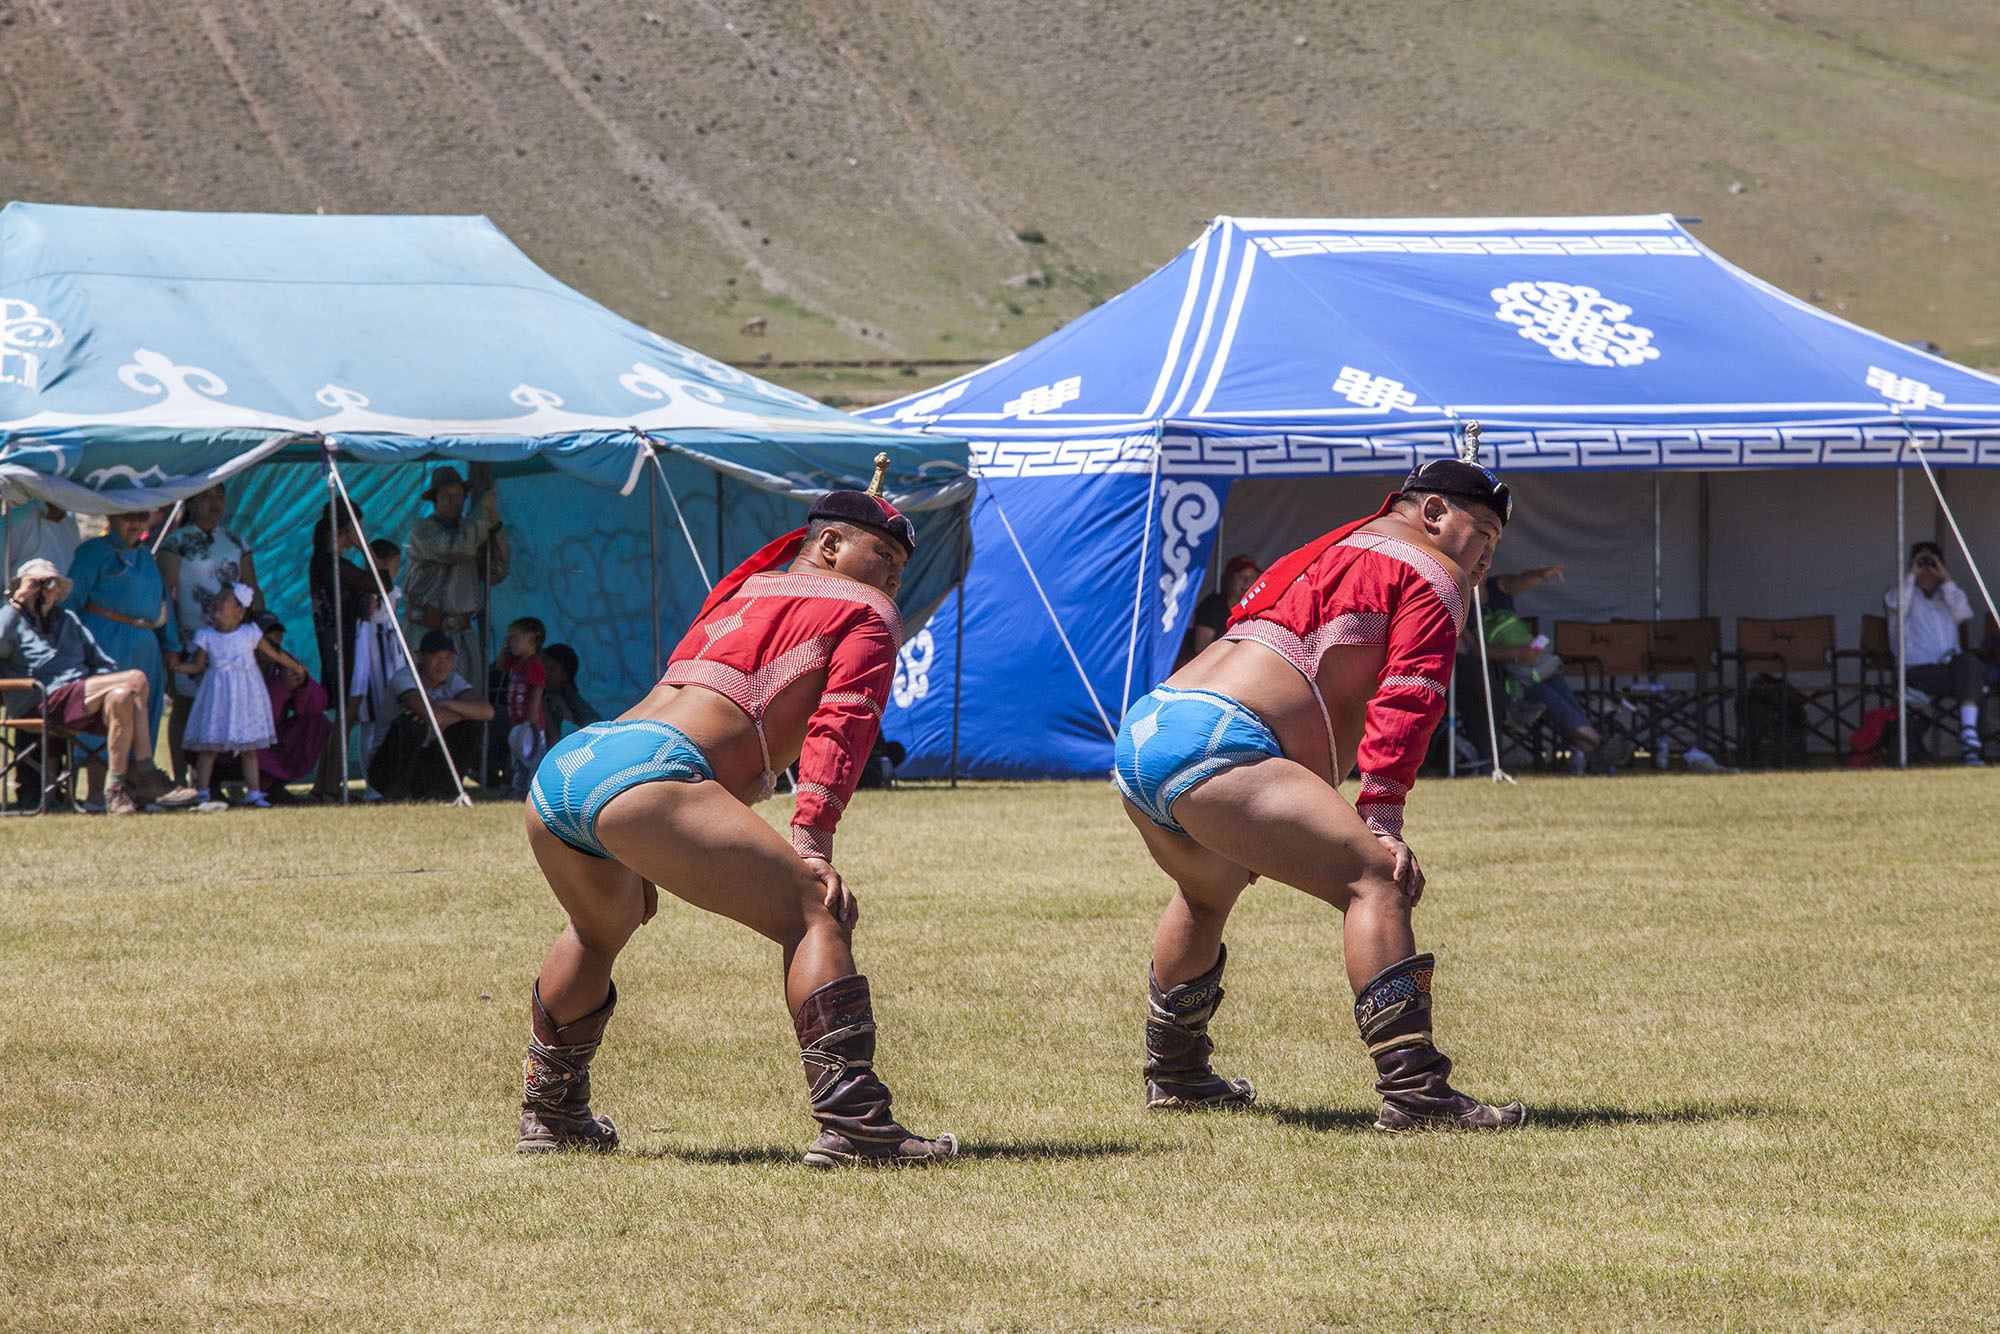 Mongolian wrestlers stretching on field